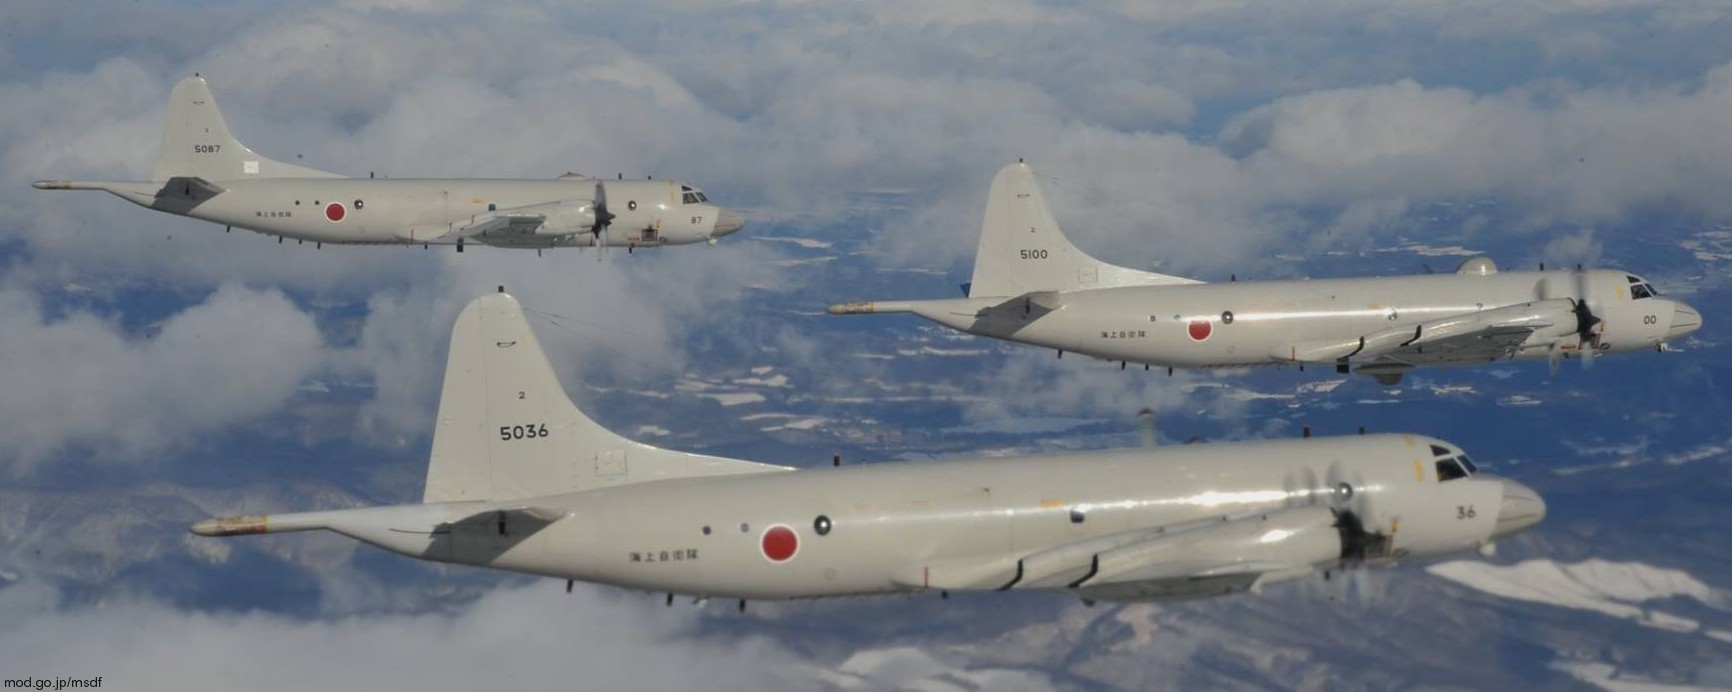 kawasaki p-3c orion patrol aircraft mpa japan maritime self defense force jmsdf 5036 03